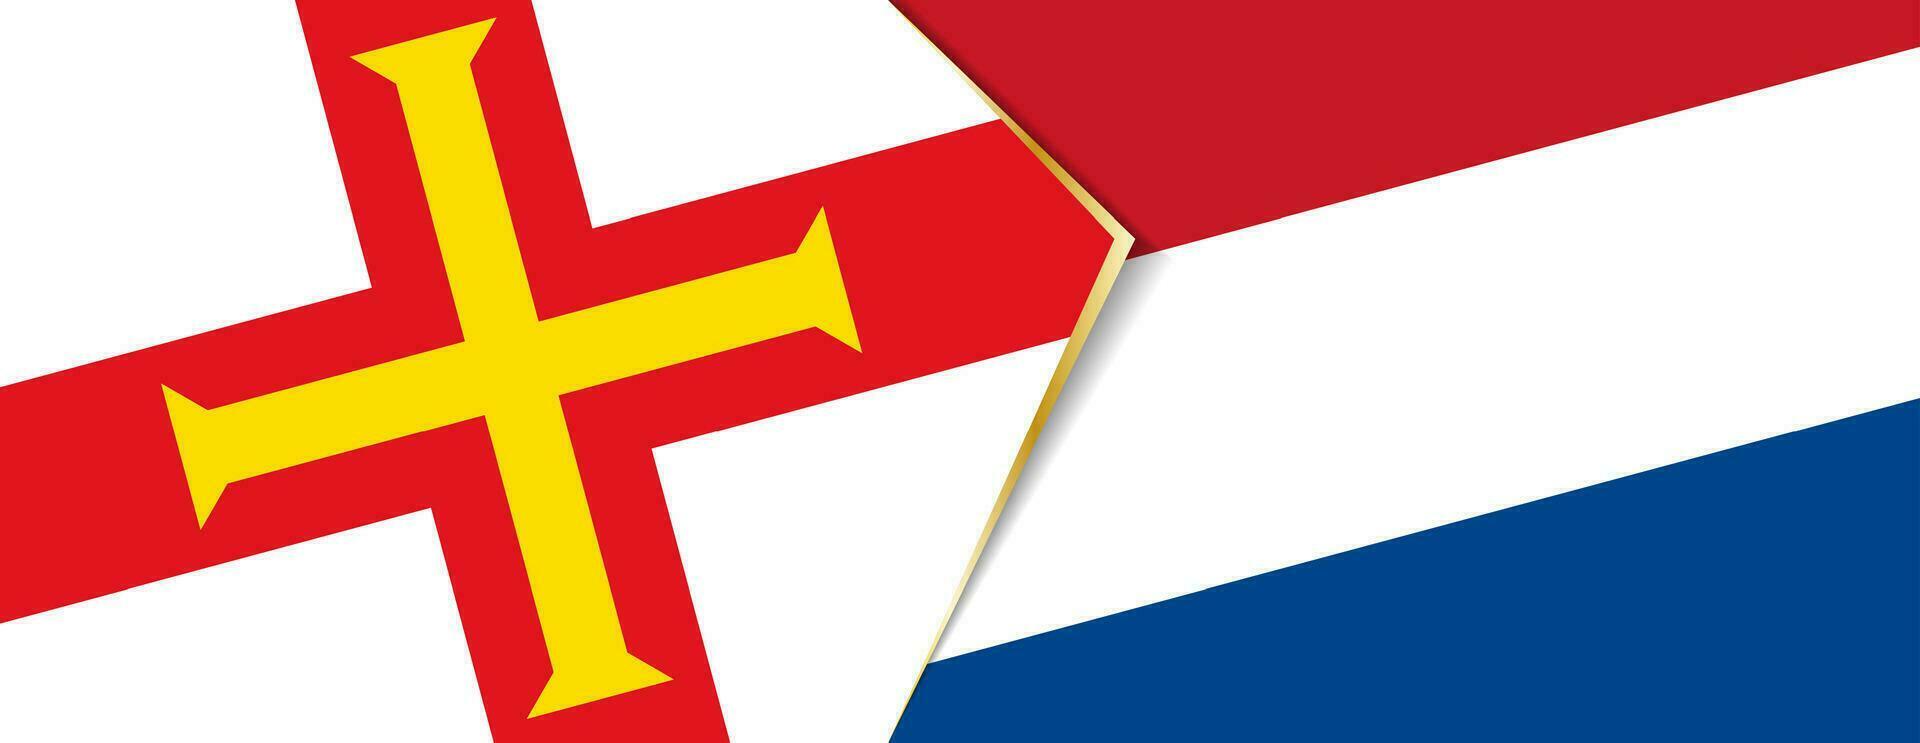 Guernsey en Nederland vlaggen, twee vector vlaggen.